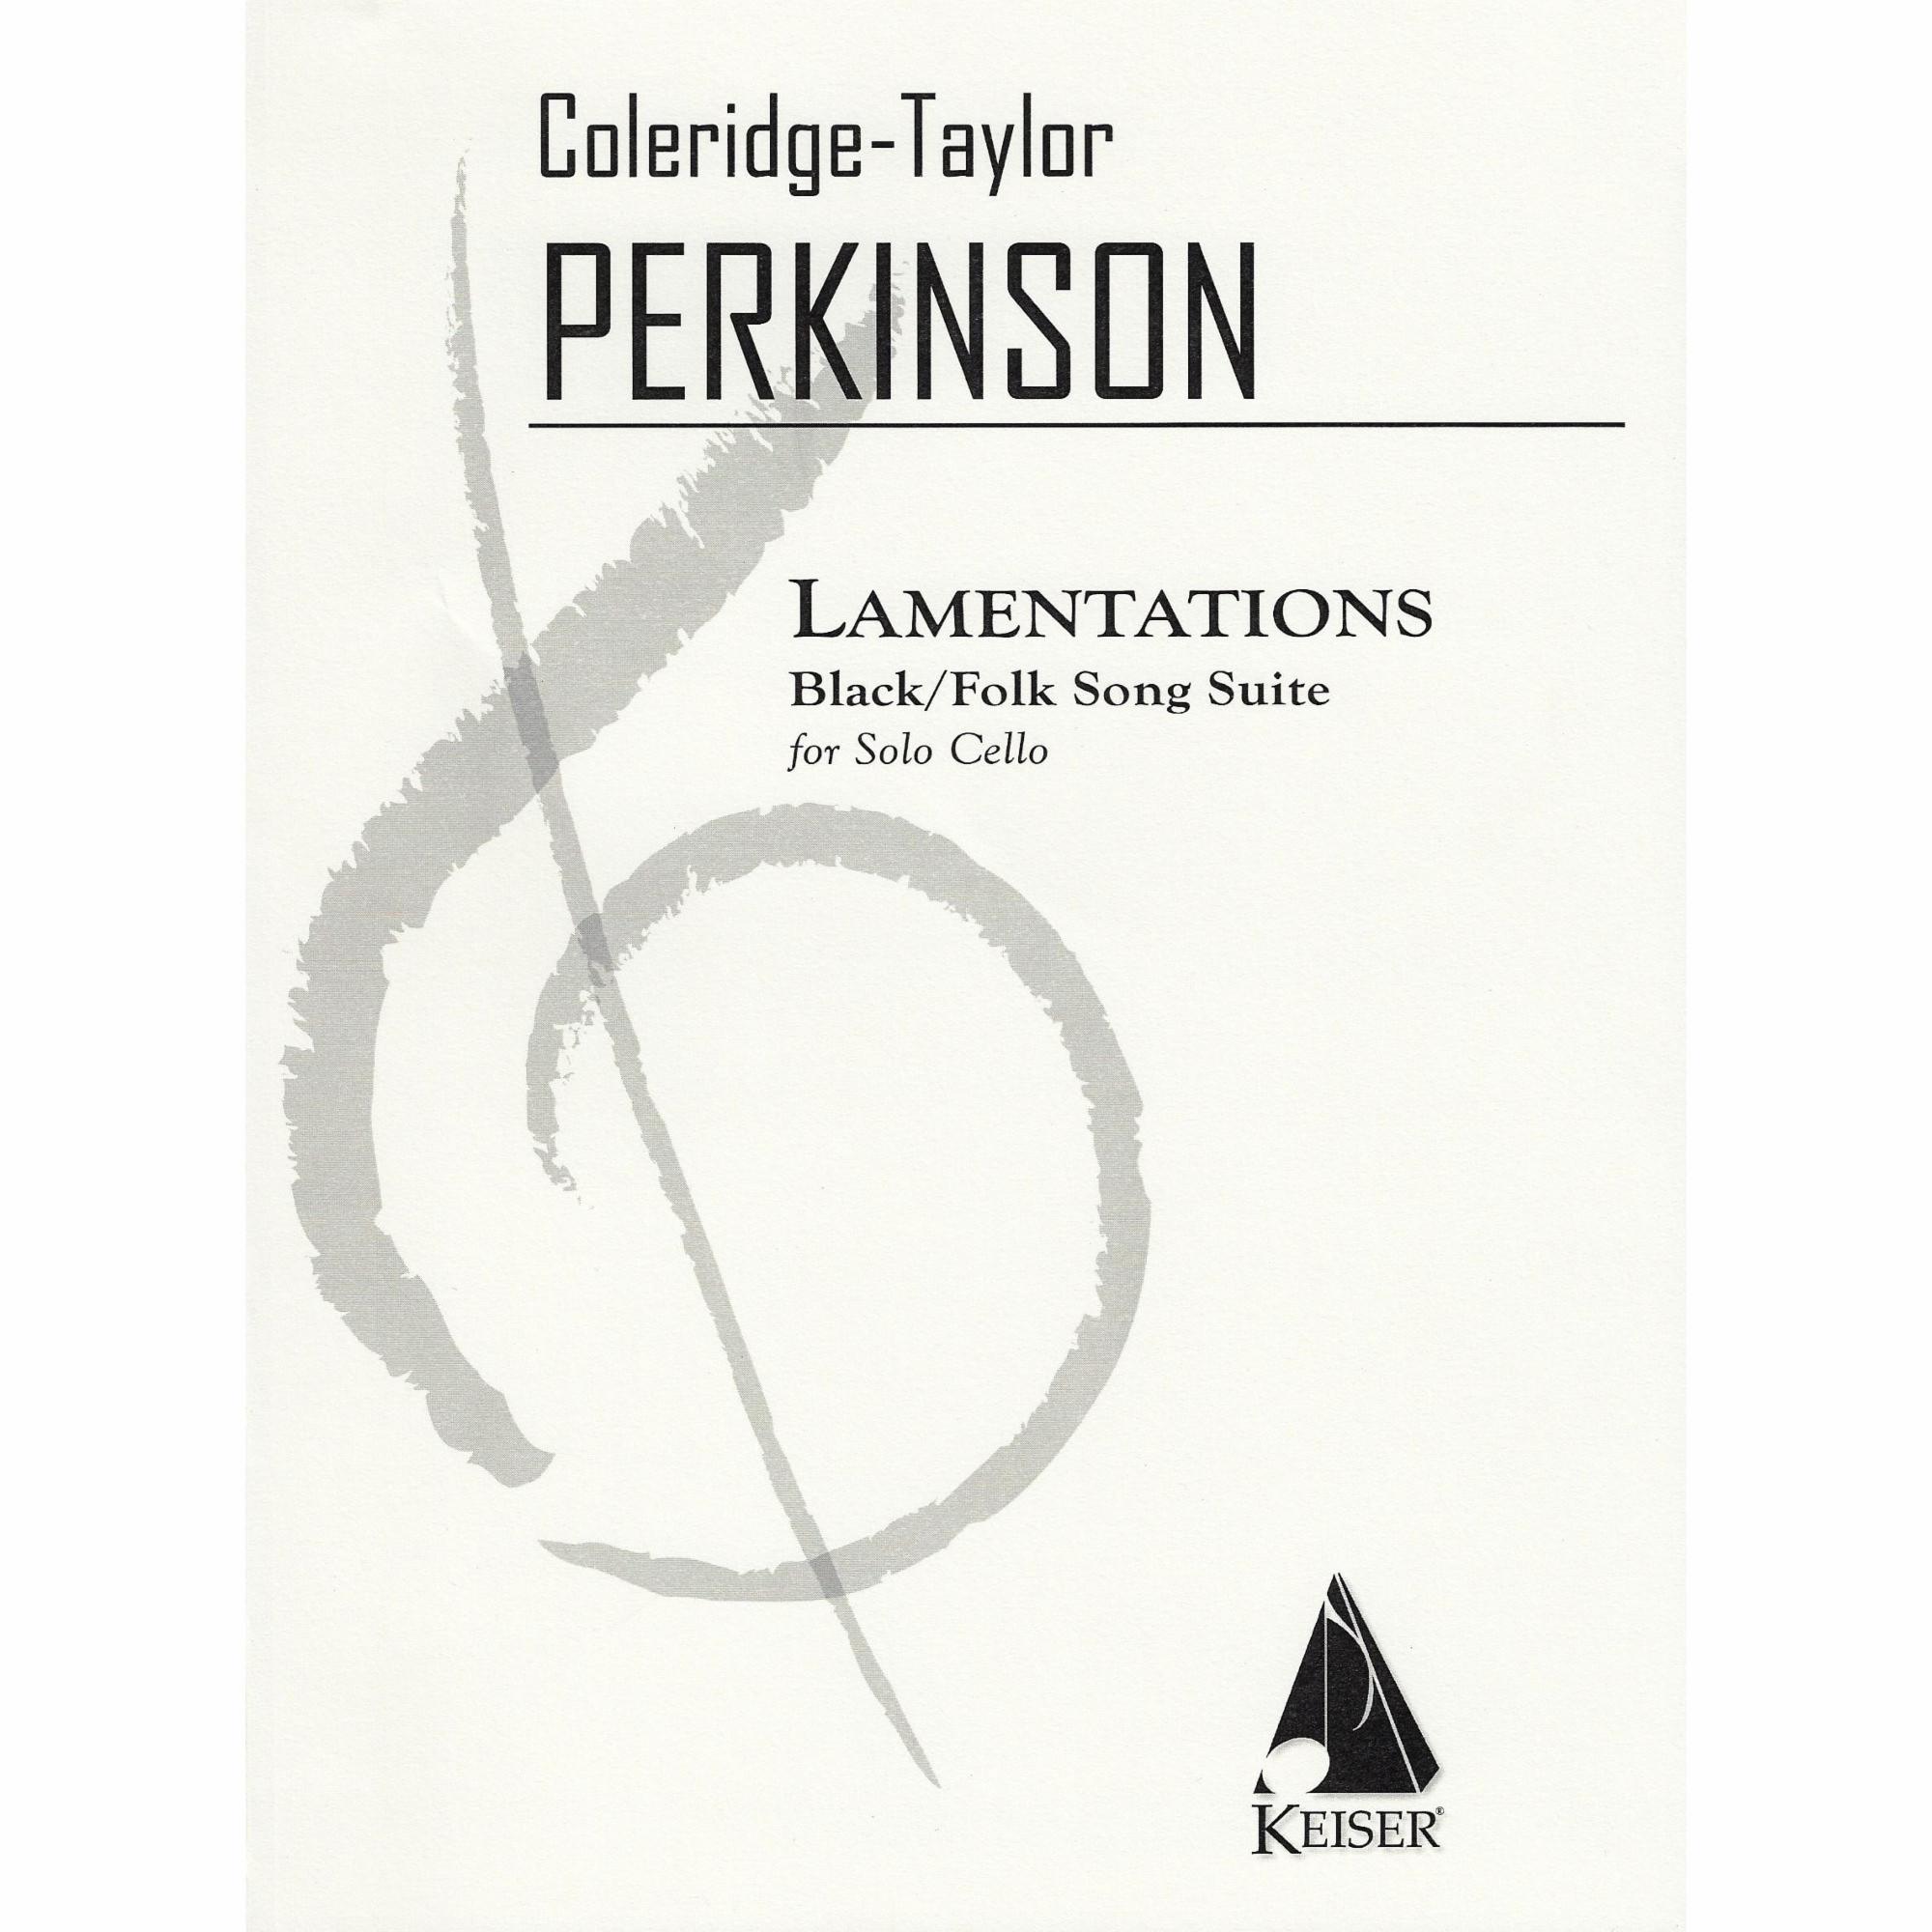 Perkinson -- Lamentations: Black/Folk Song Suite for Solo Cello